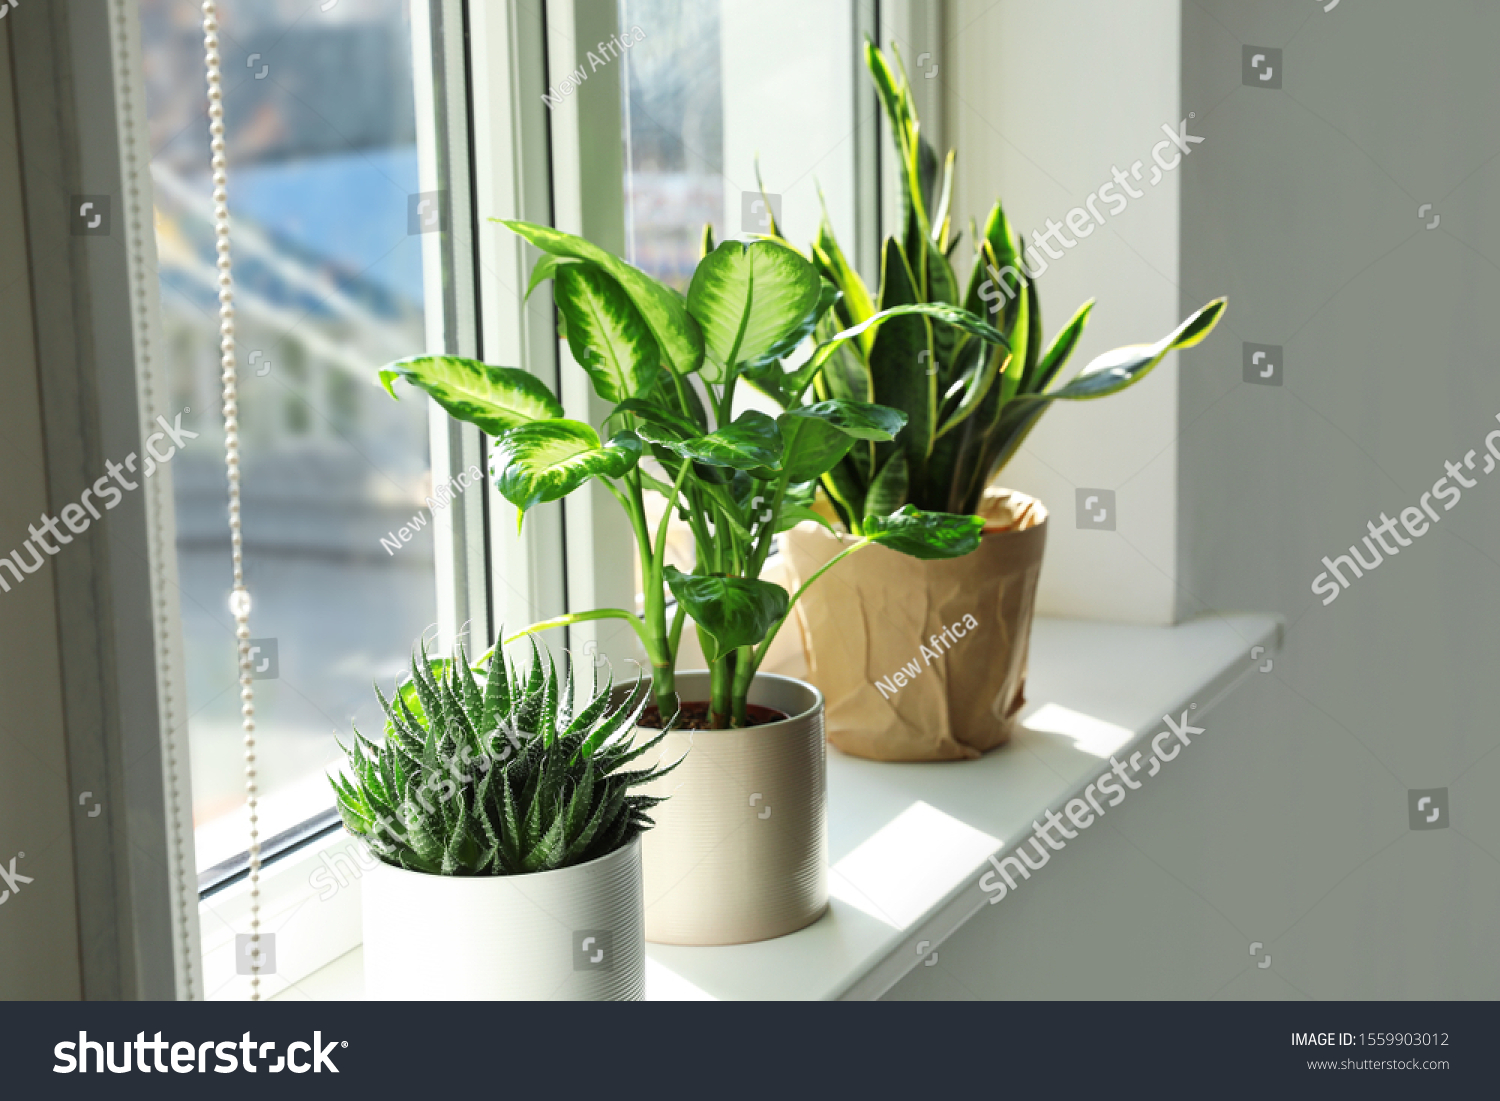 558,174 Plants on windows Images, Stock Photos & Vectors | Shutterstock